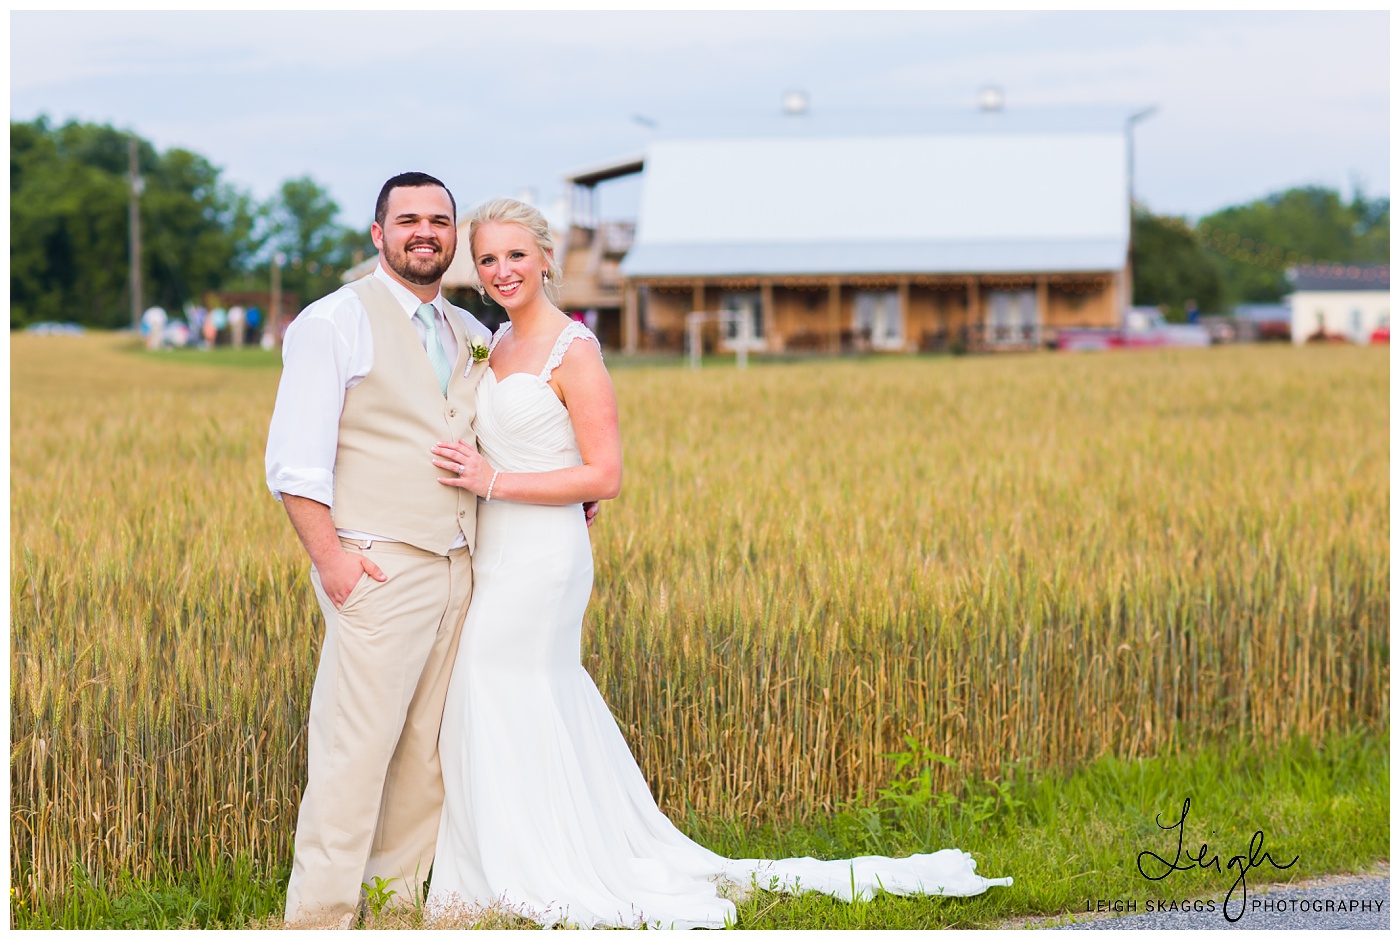 Fairview Farms in Powhatan Virginia rustic barn wedding!